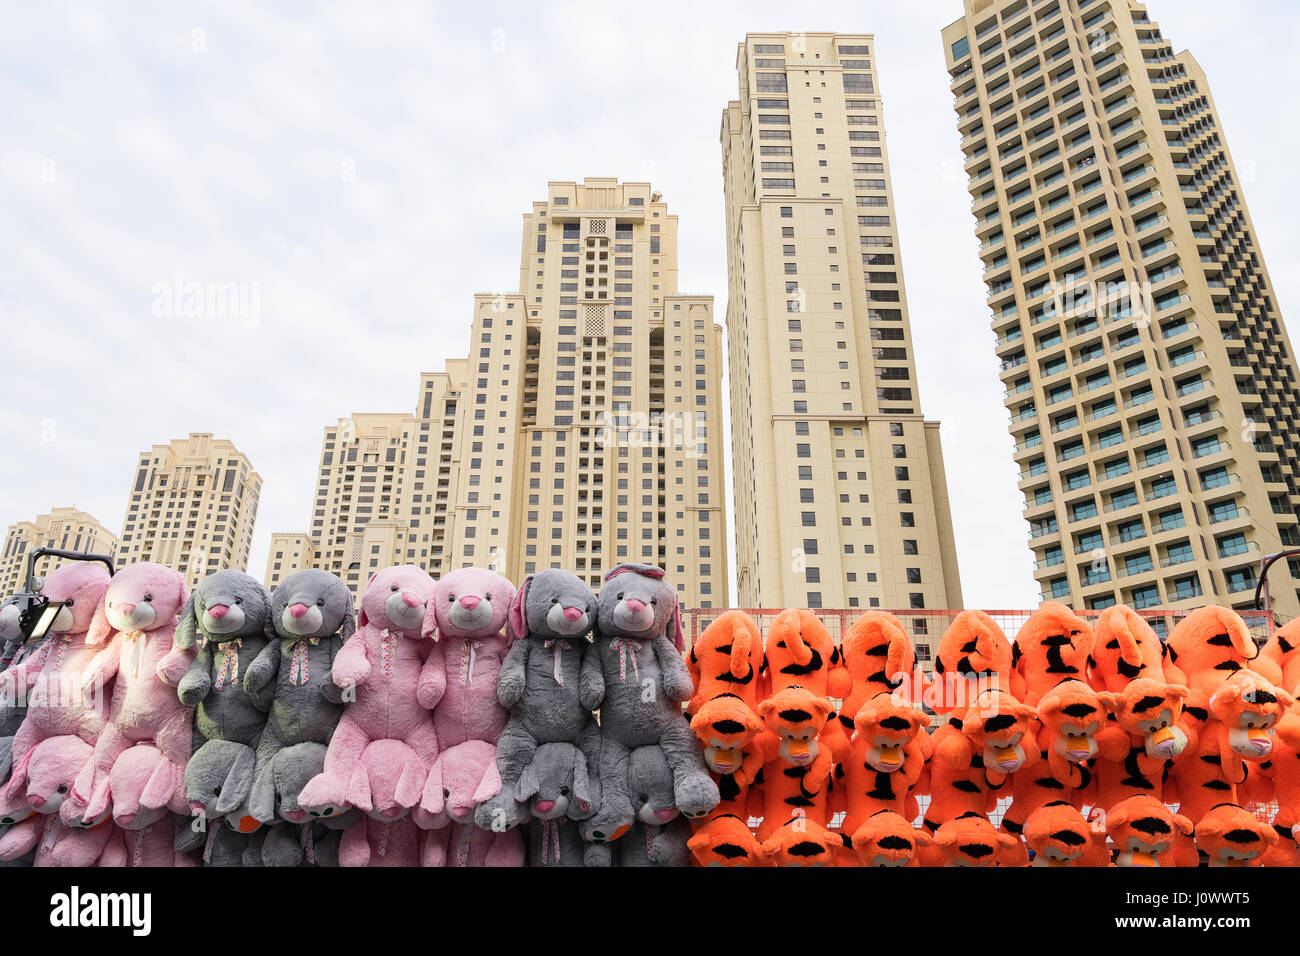 Dubai - January 30: View of Dubai Marina skyscrapers and colorful stuffed animal toys on January 30, 2017. Stock Photo